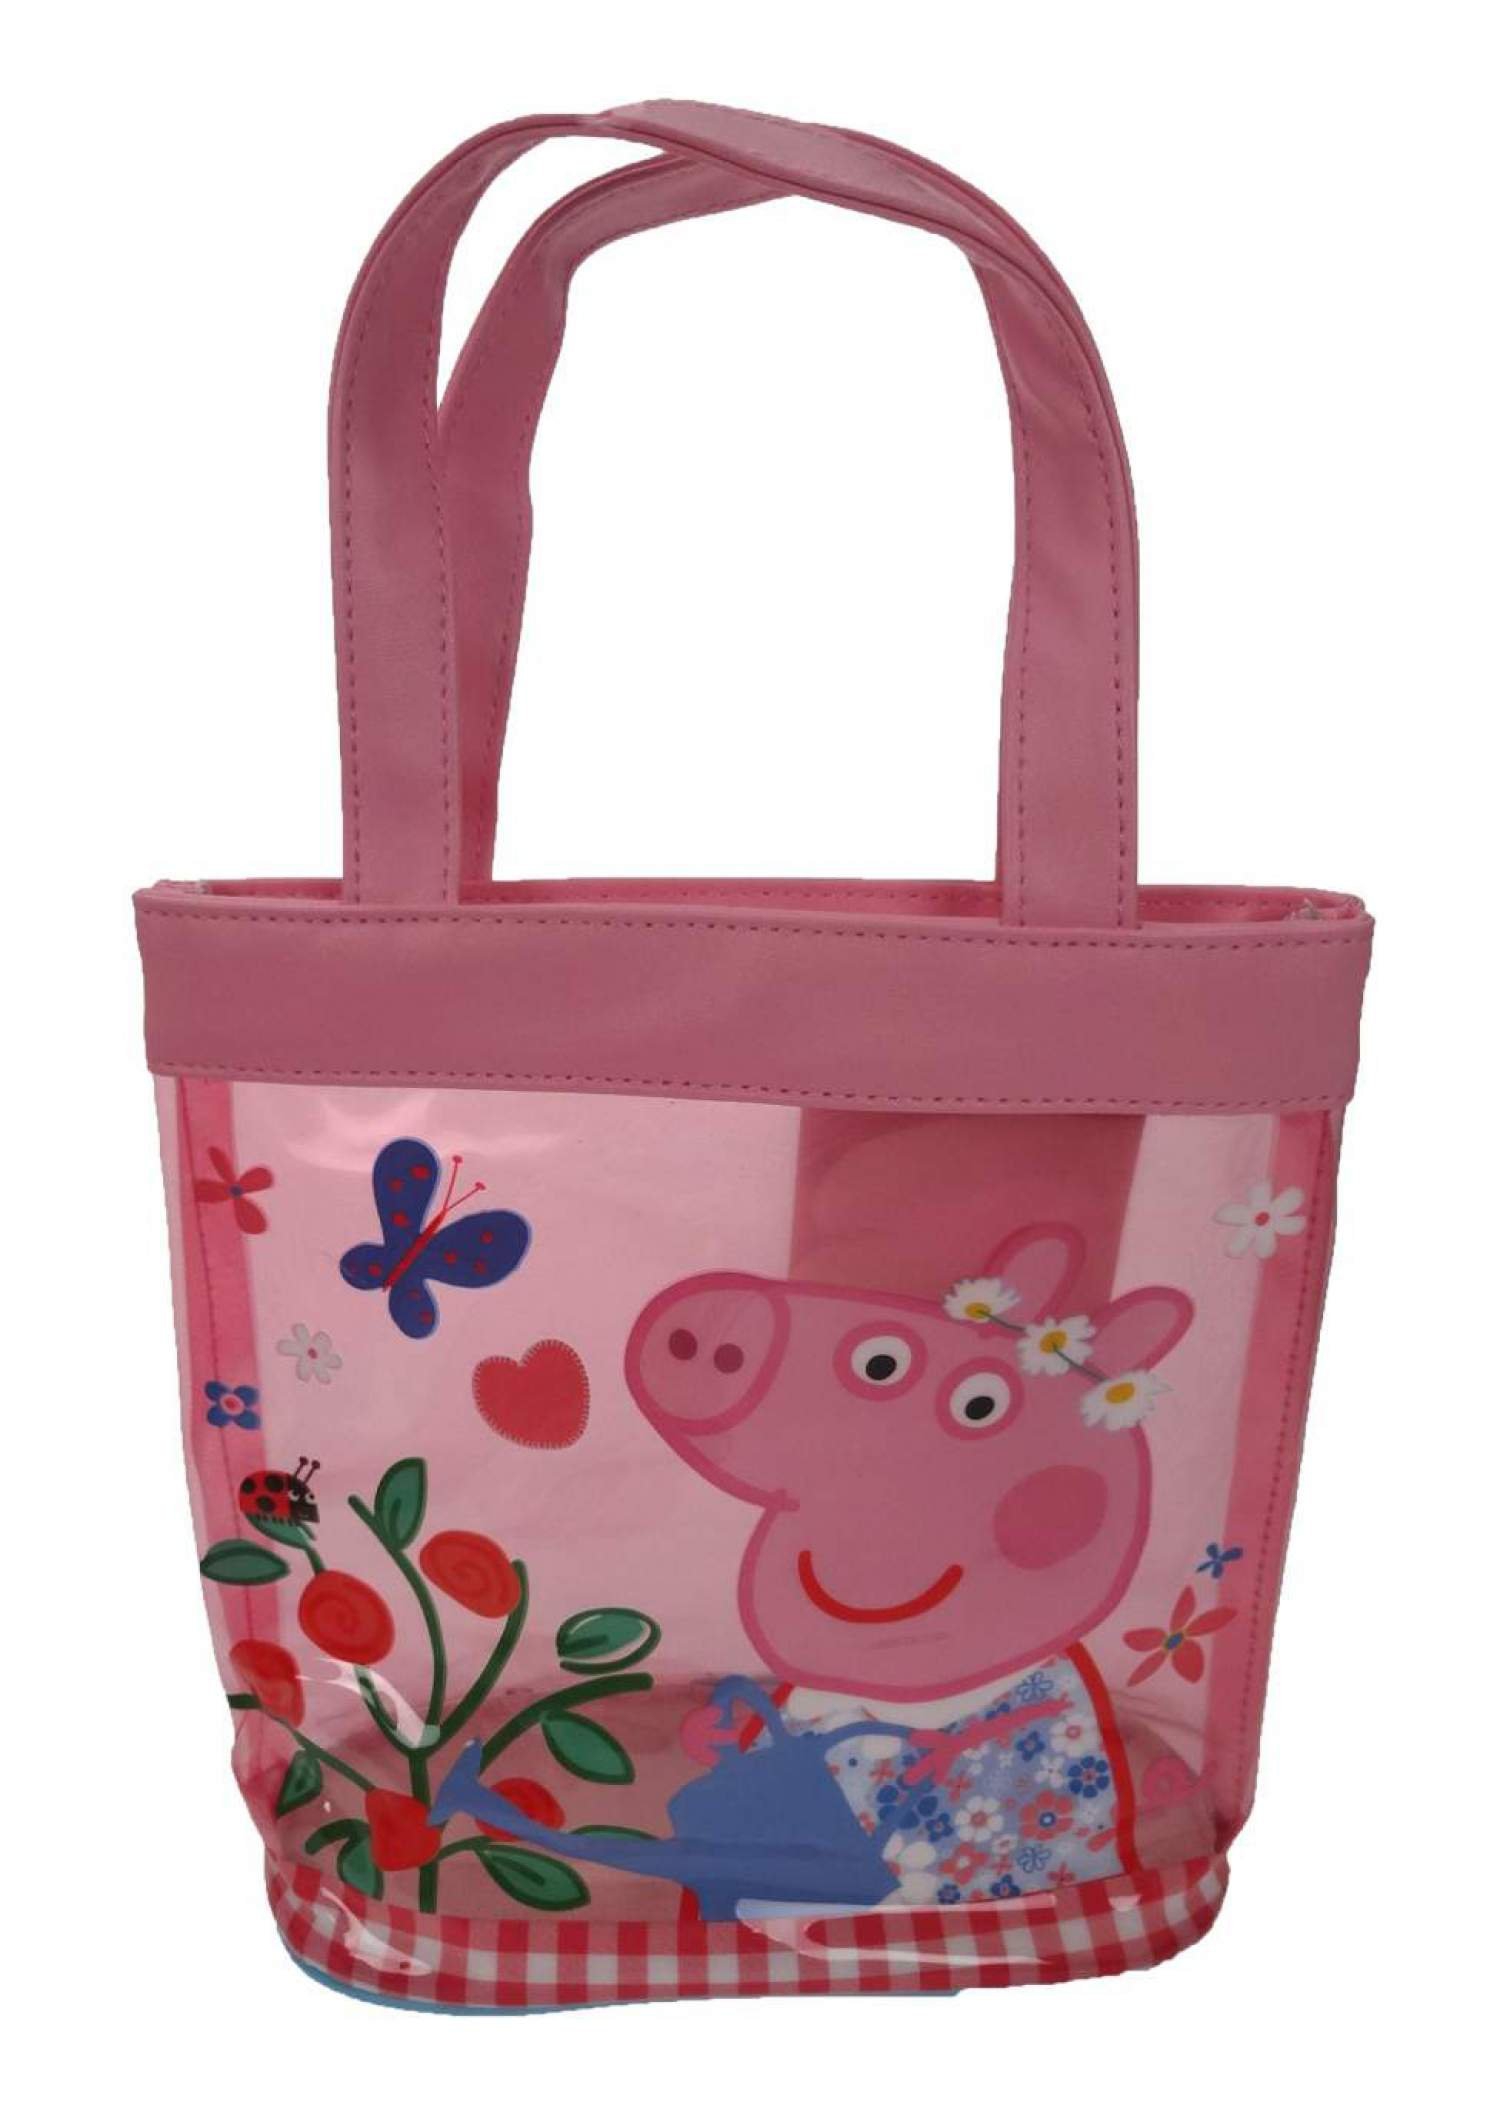 Peppa Pig 'Home Sweet Home' Tote Bag Shopping Shopper